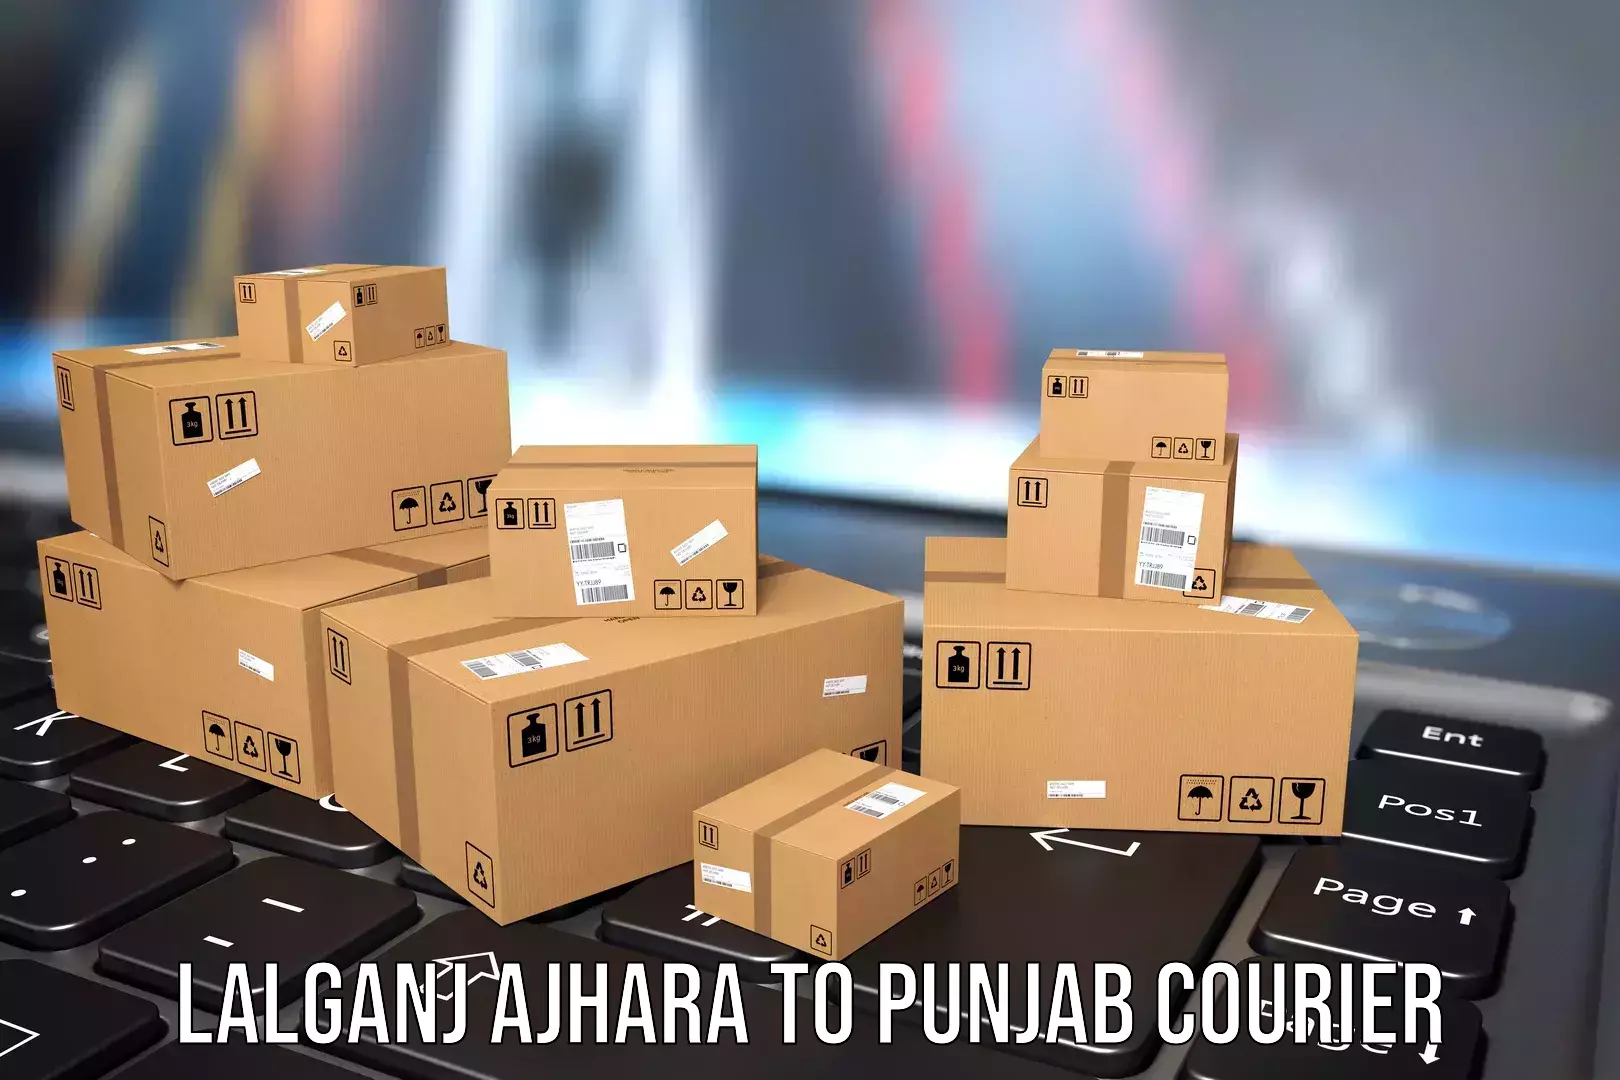 Door-to-door baggage service Lalganj Ajhara to Punjab